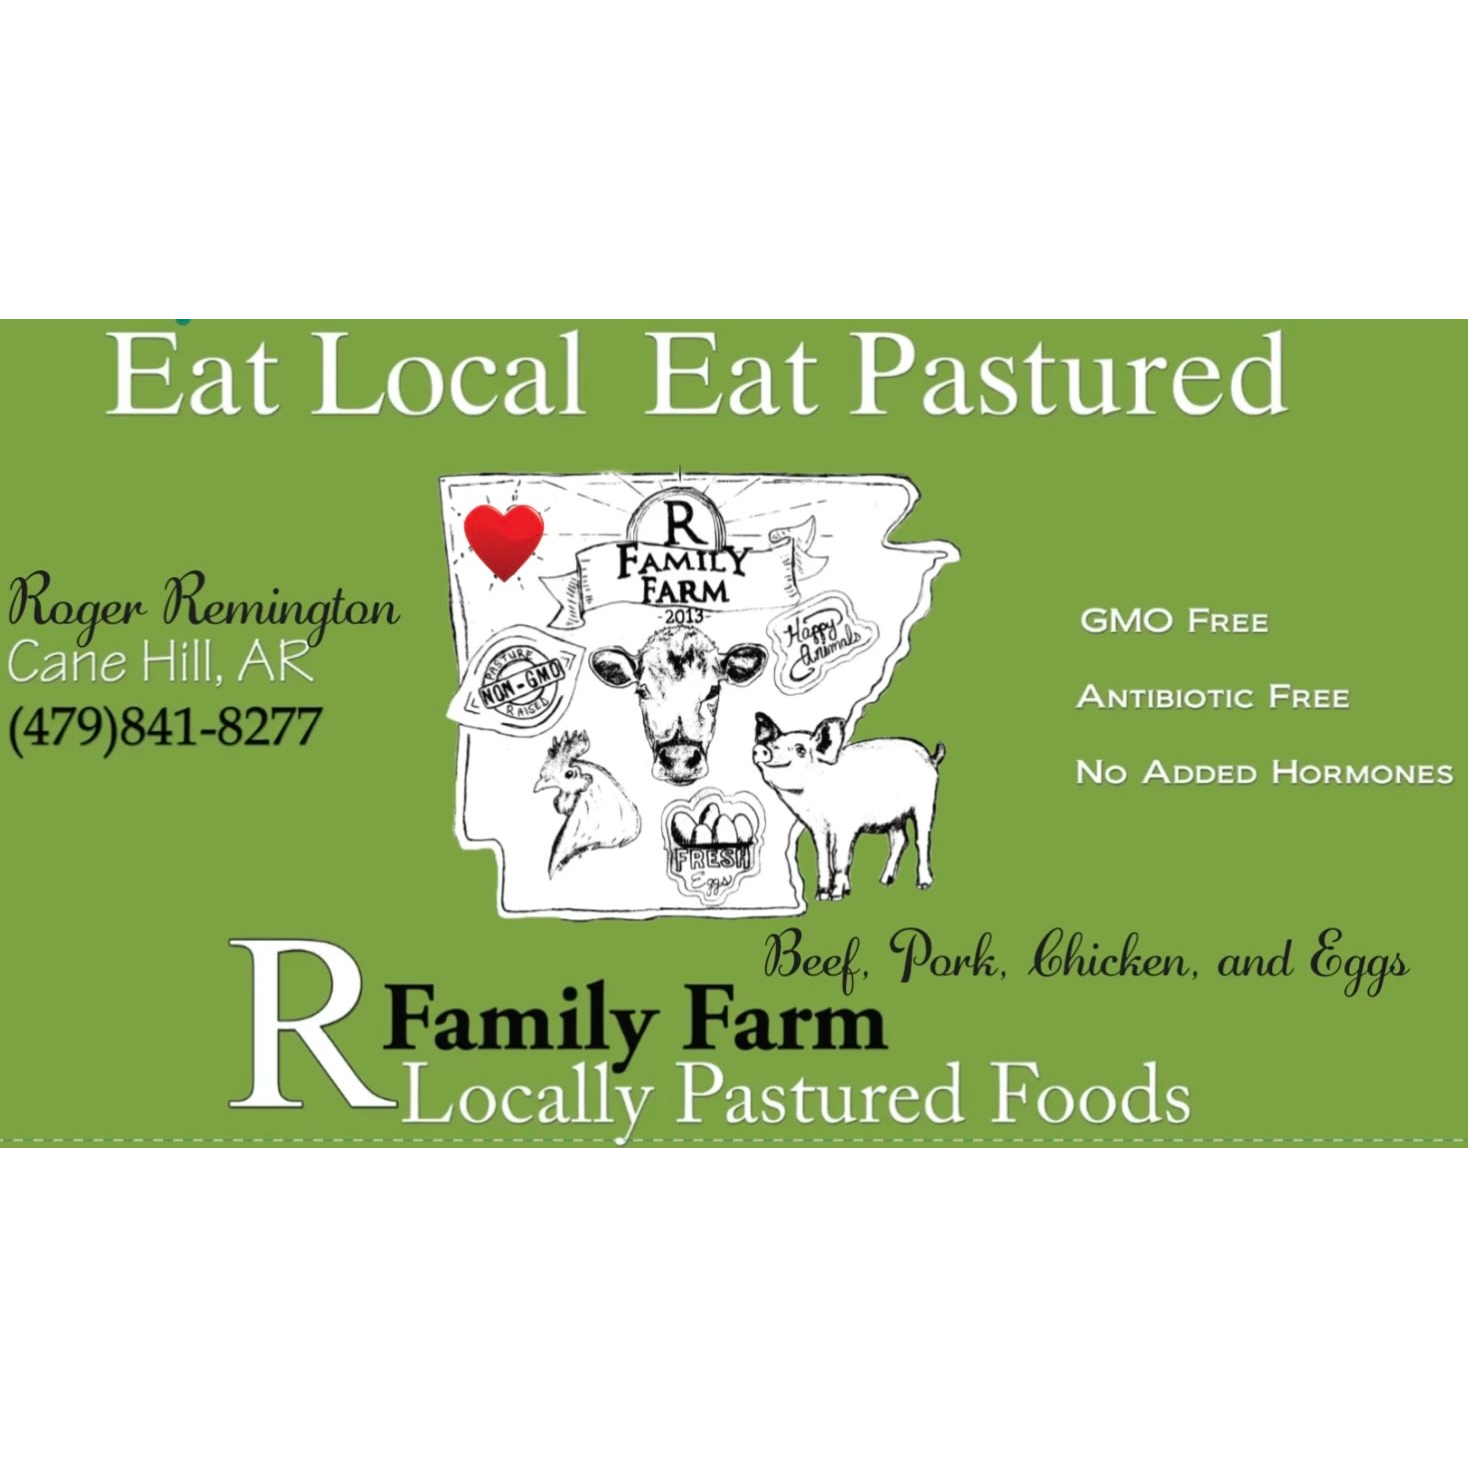 R-Family Farm